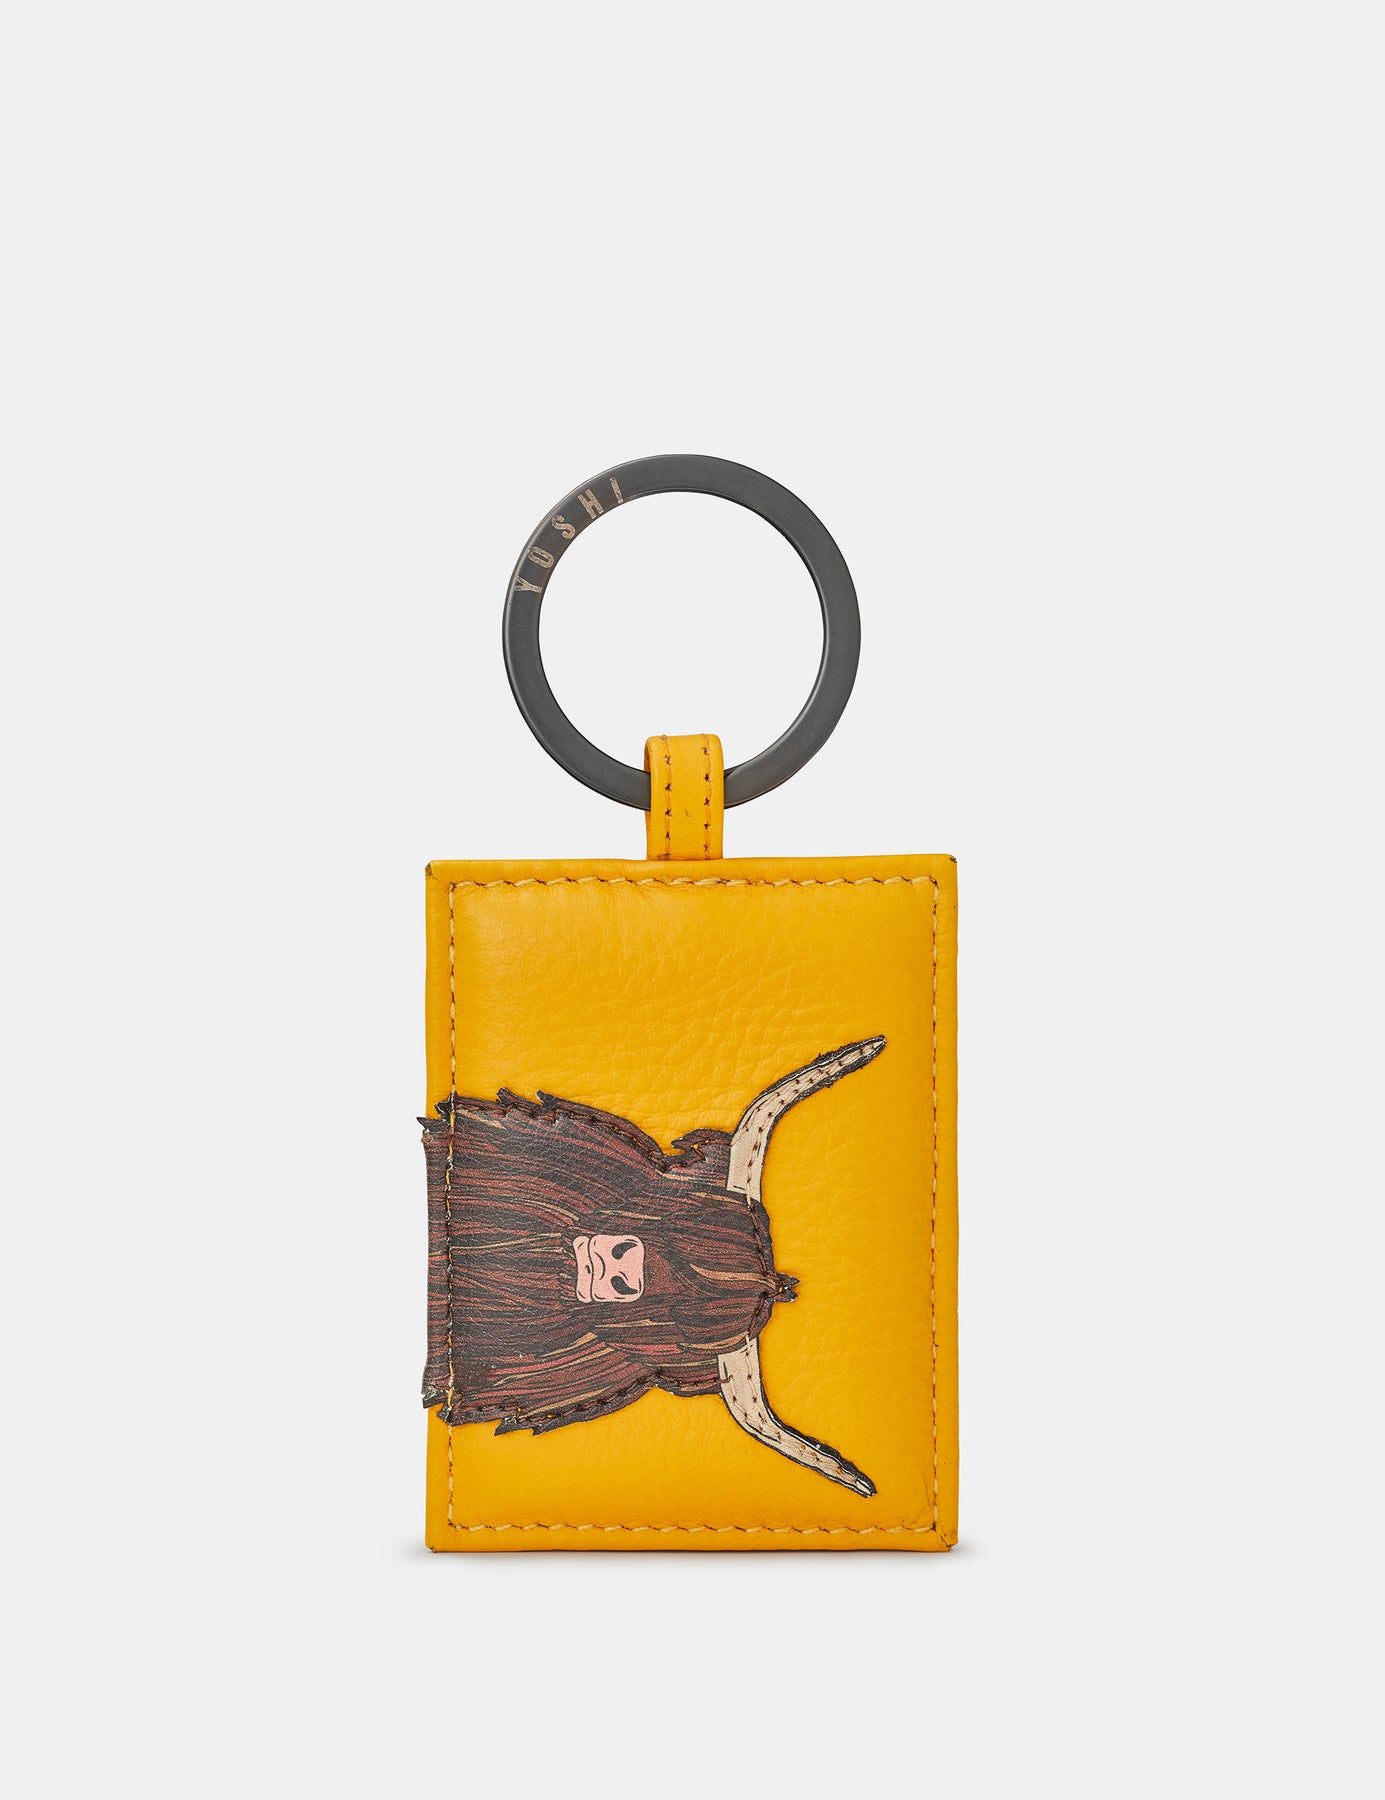 Louis Vuitton cow shape leather keychain